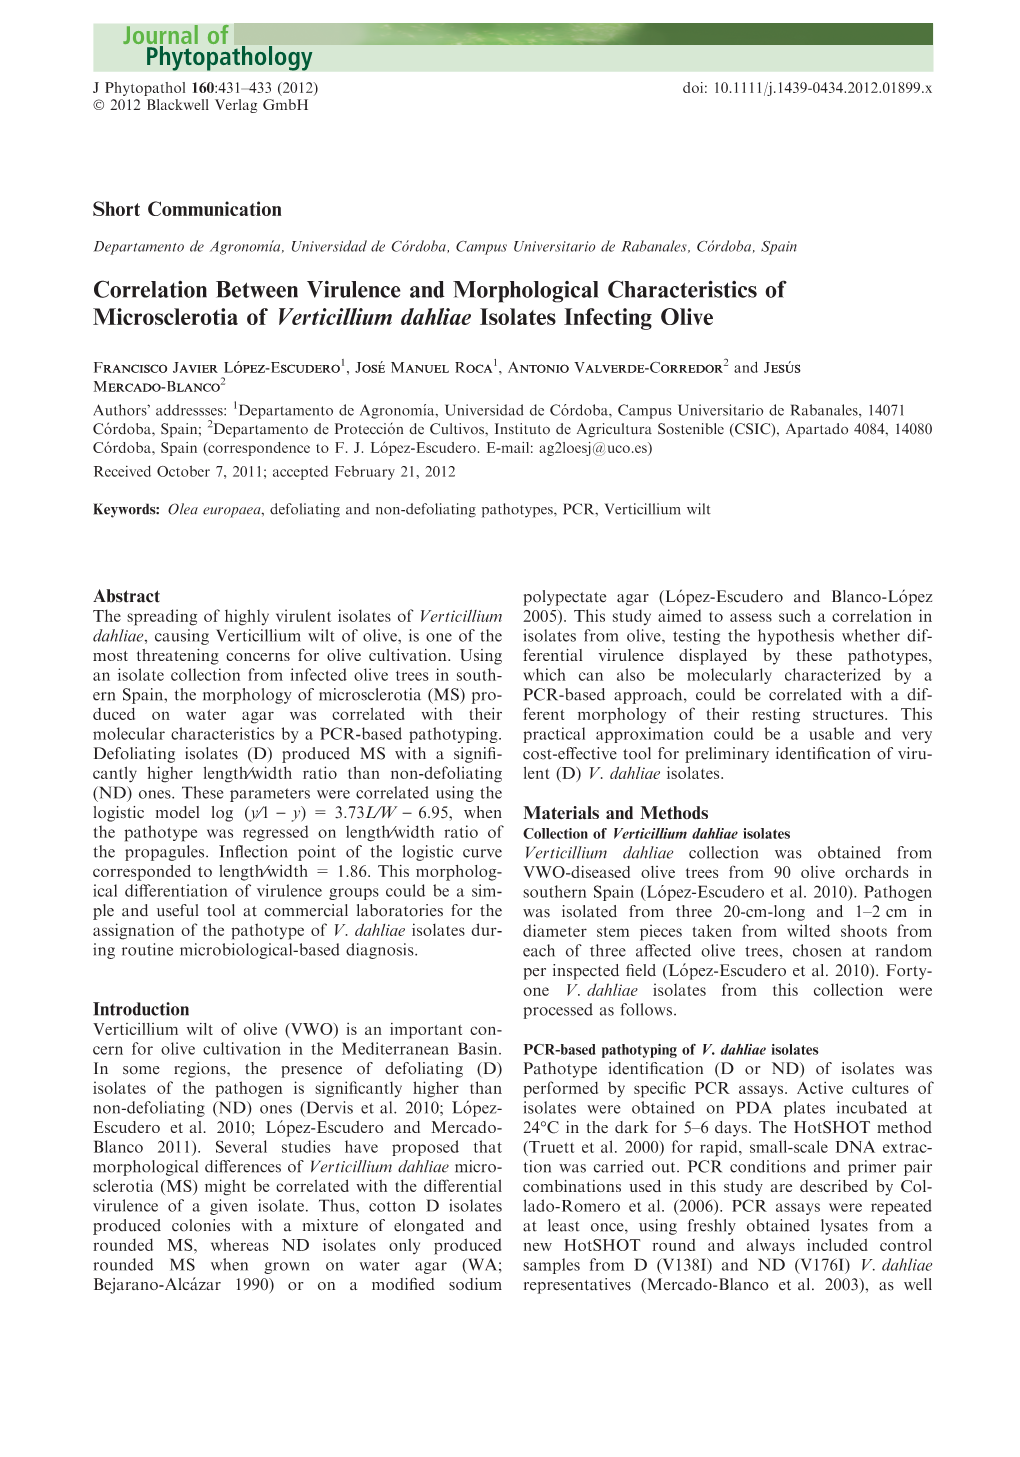 Correlation Between Virulence and Morphological Characteristics of Microsclerotia of Verticillium Dahliae Isolates Infecting Olive